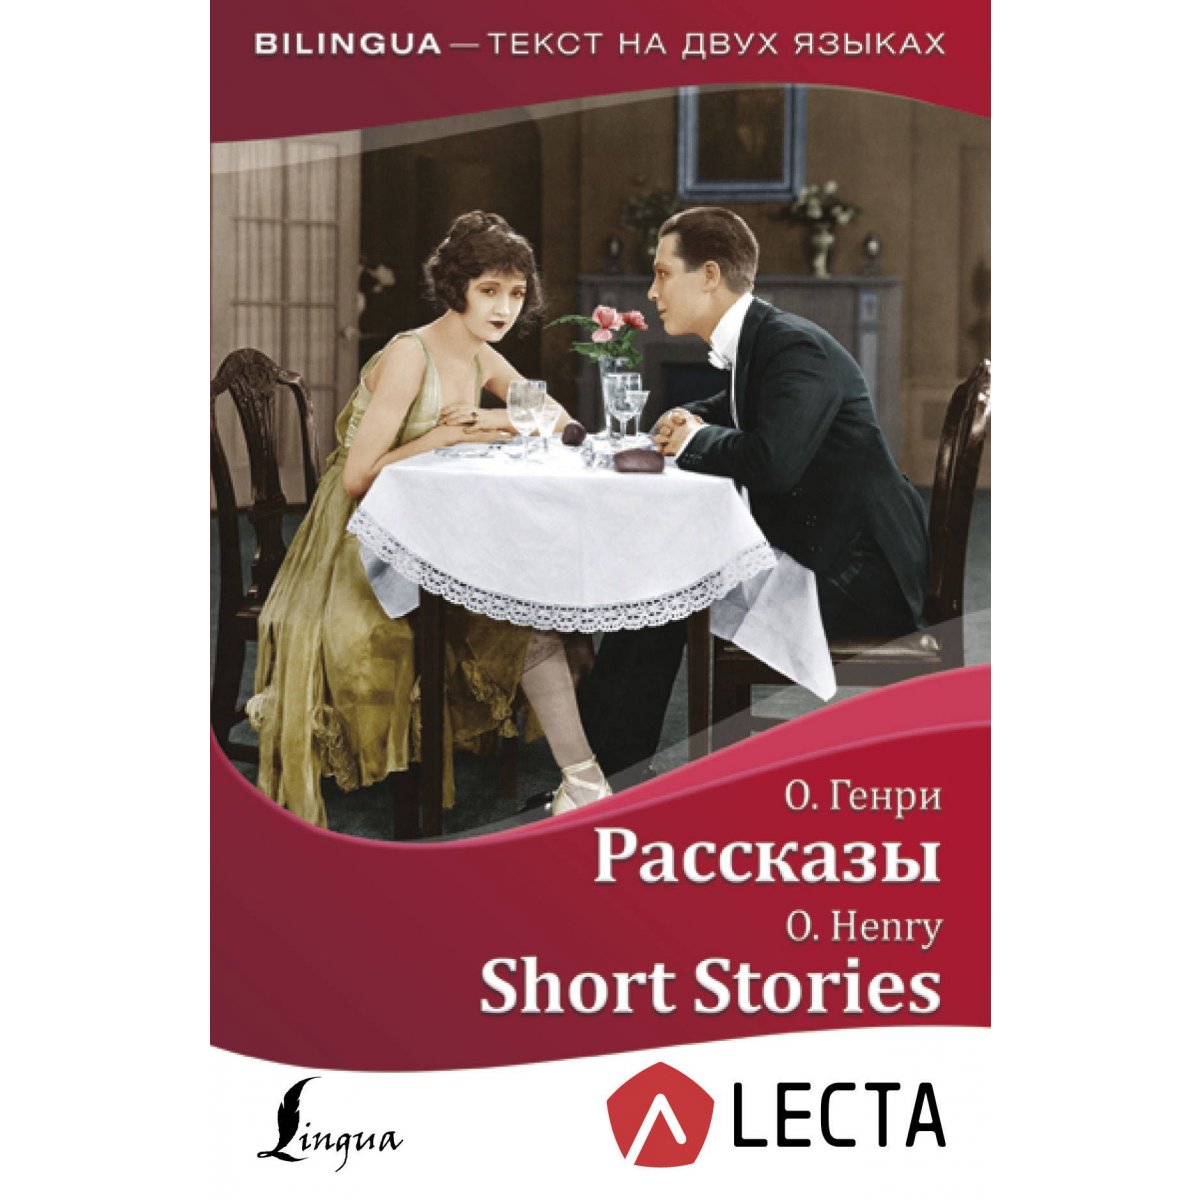 Short stories book. Bilingua книги. Short stories книги. LECTA книги на 2 языках. Короткие рассказы.